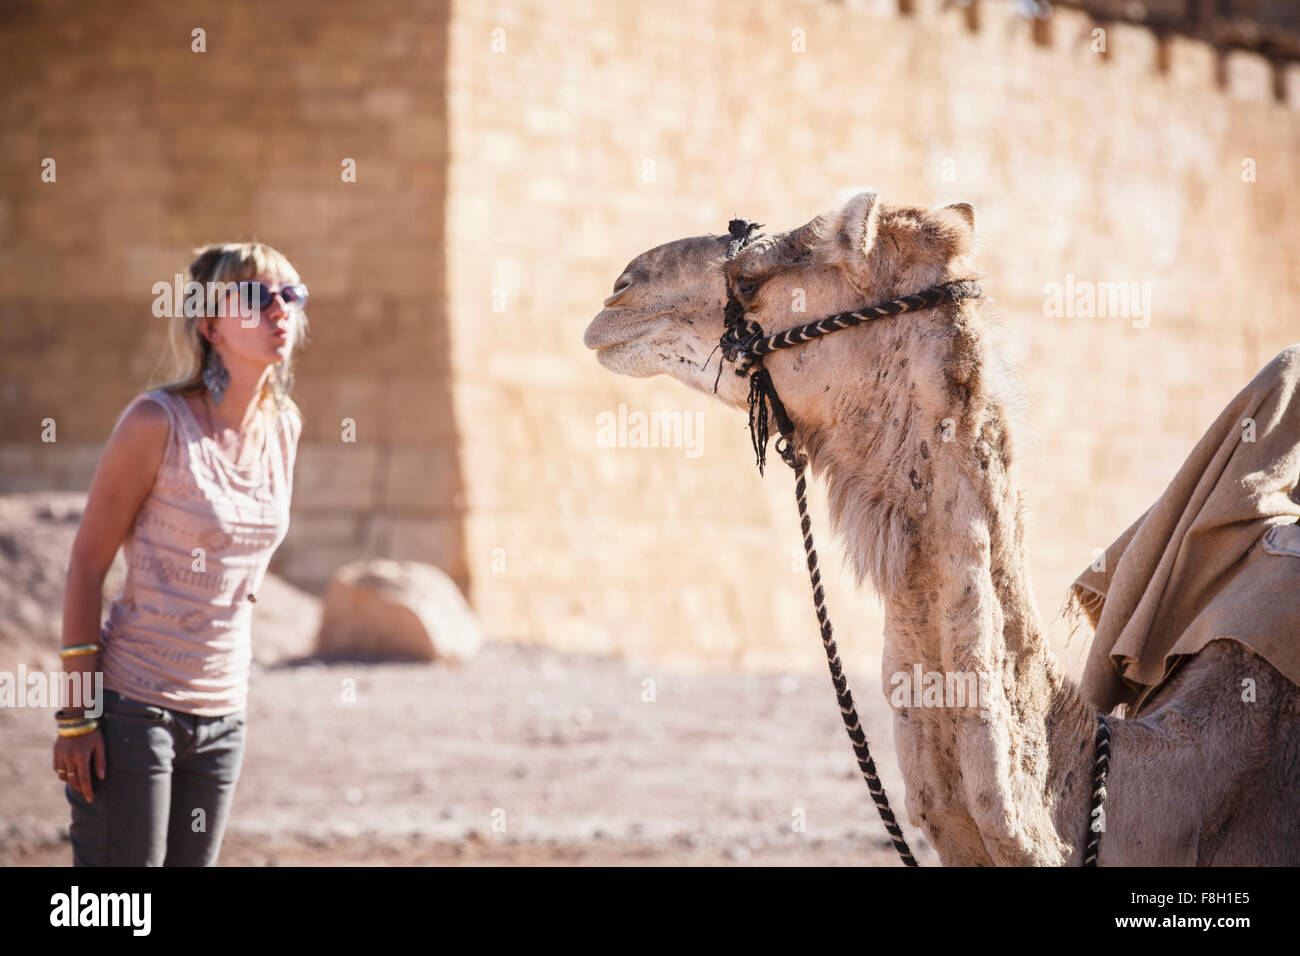 Caucasian woman admiring camel Stock Photo